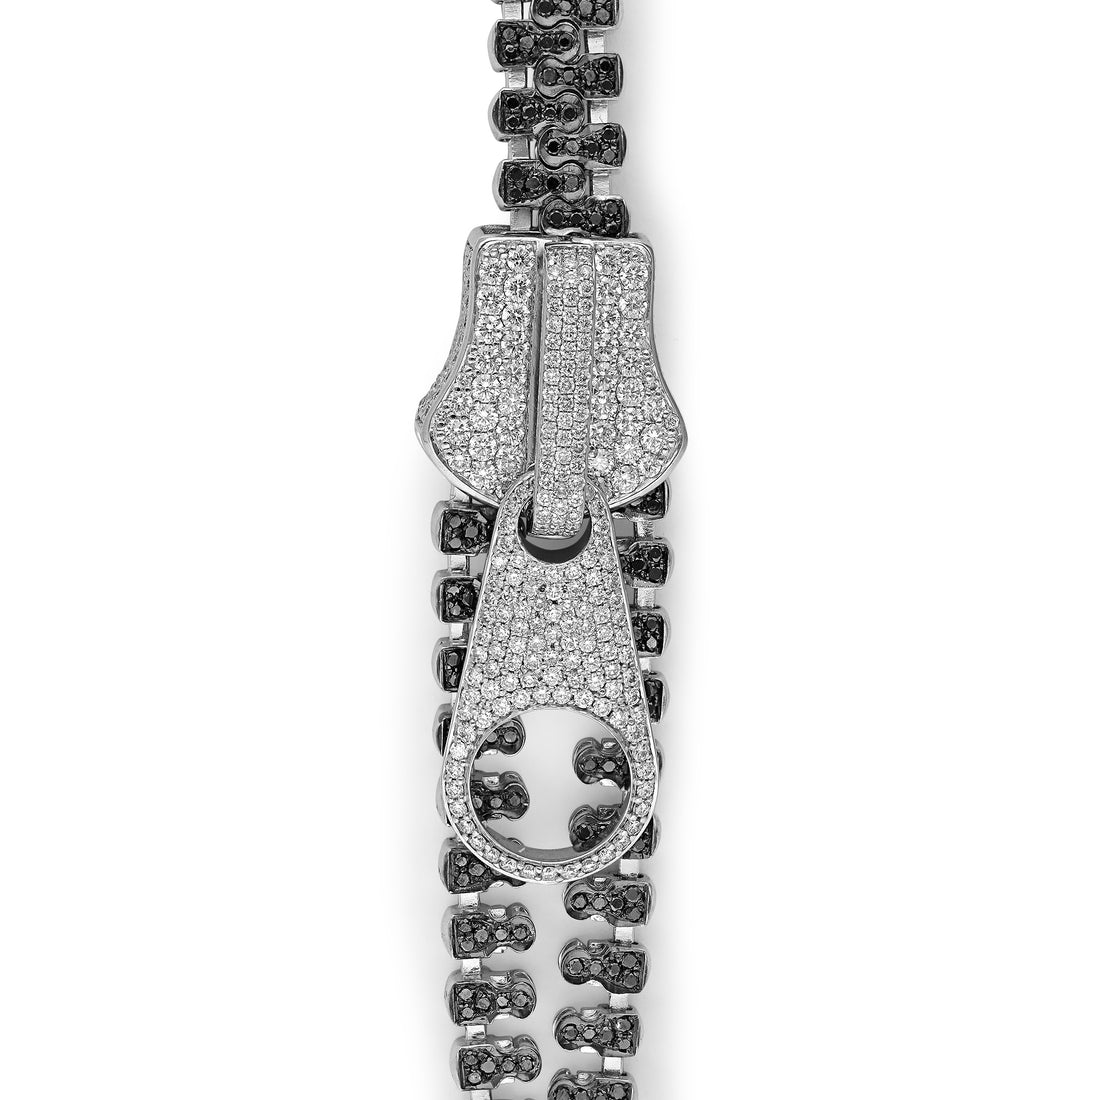 Exclusive White and Black Diamond Mechanical Zipper Bracelet - 5 Carat